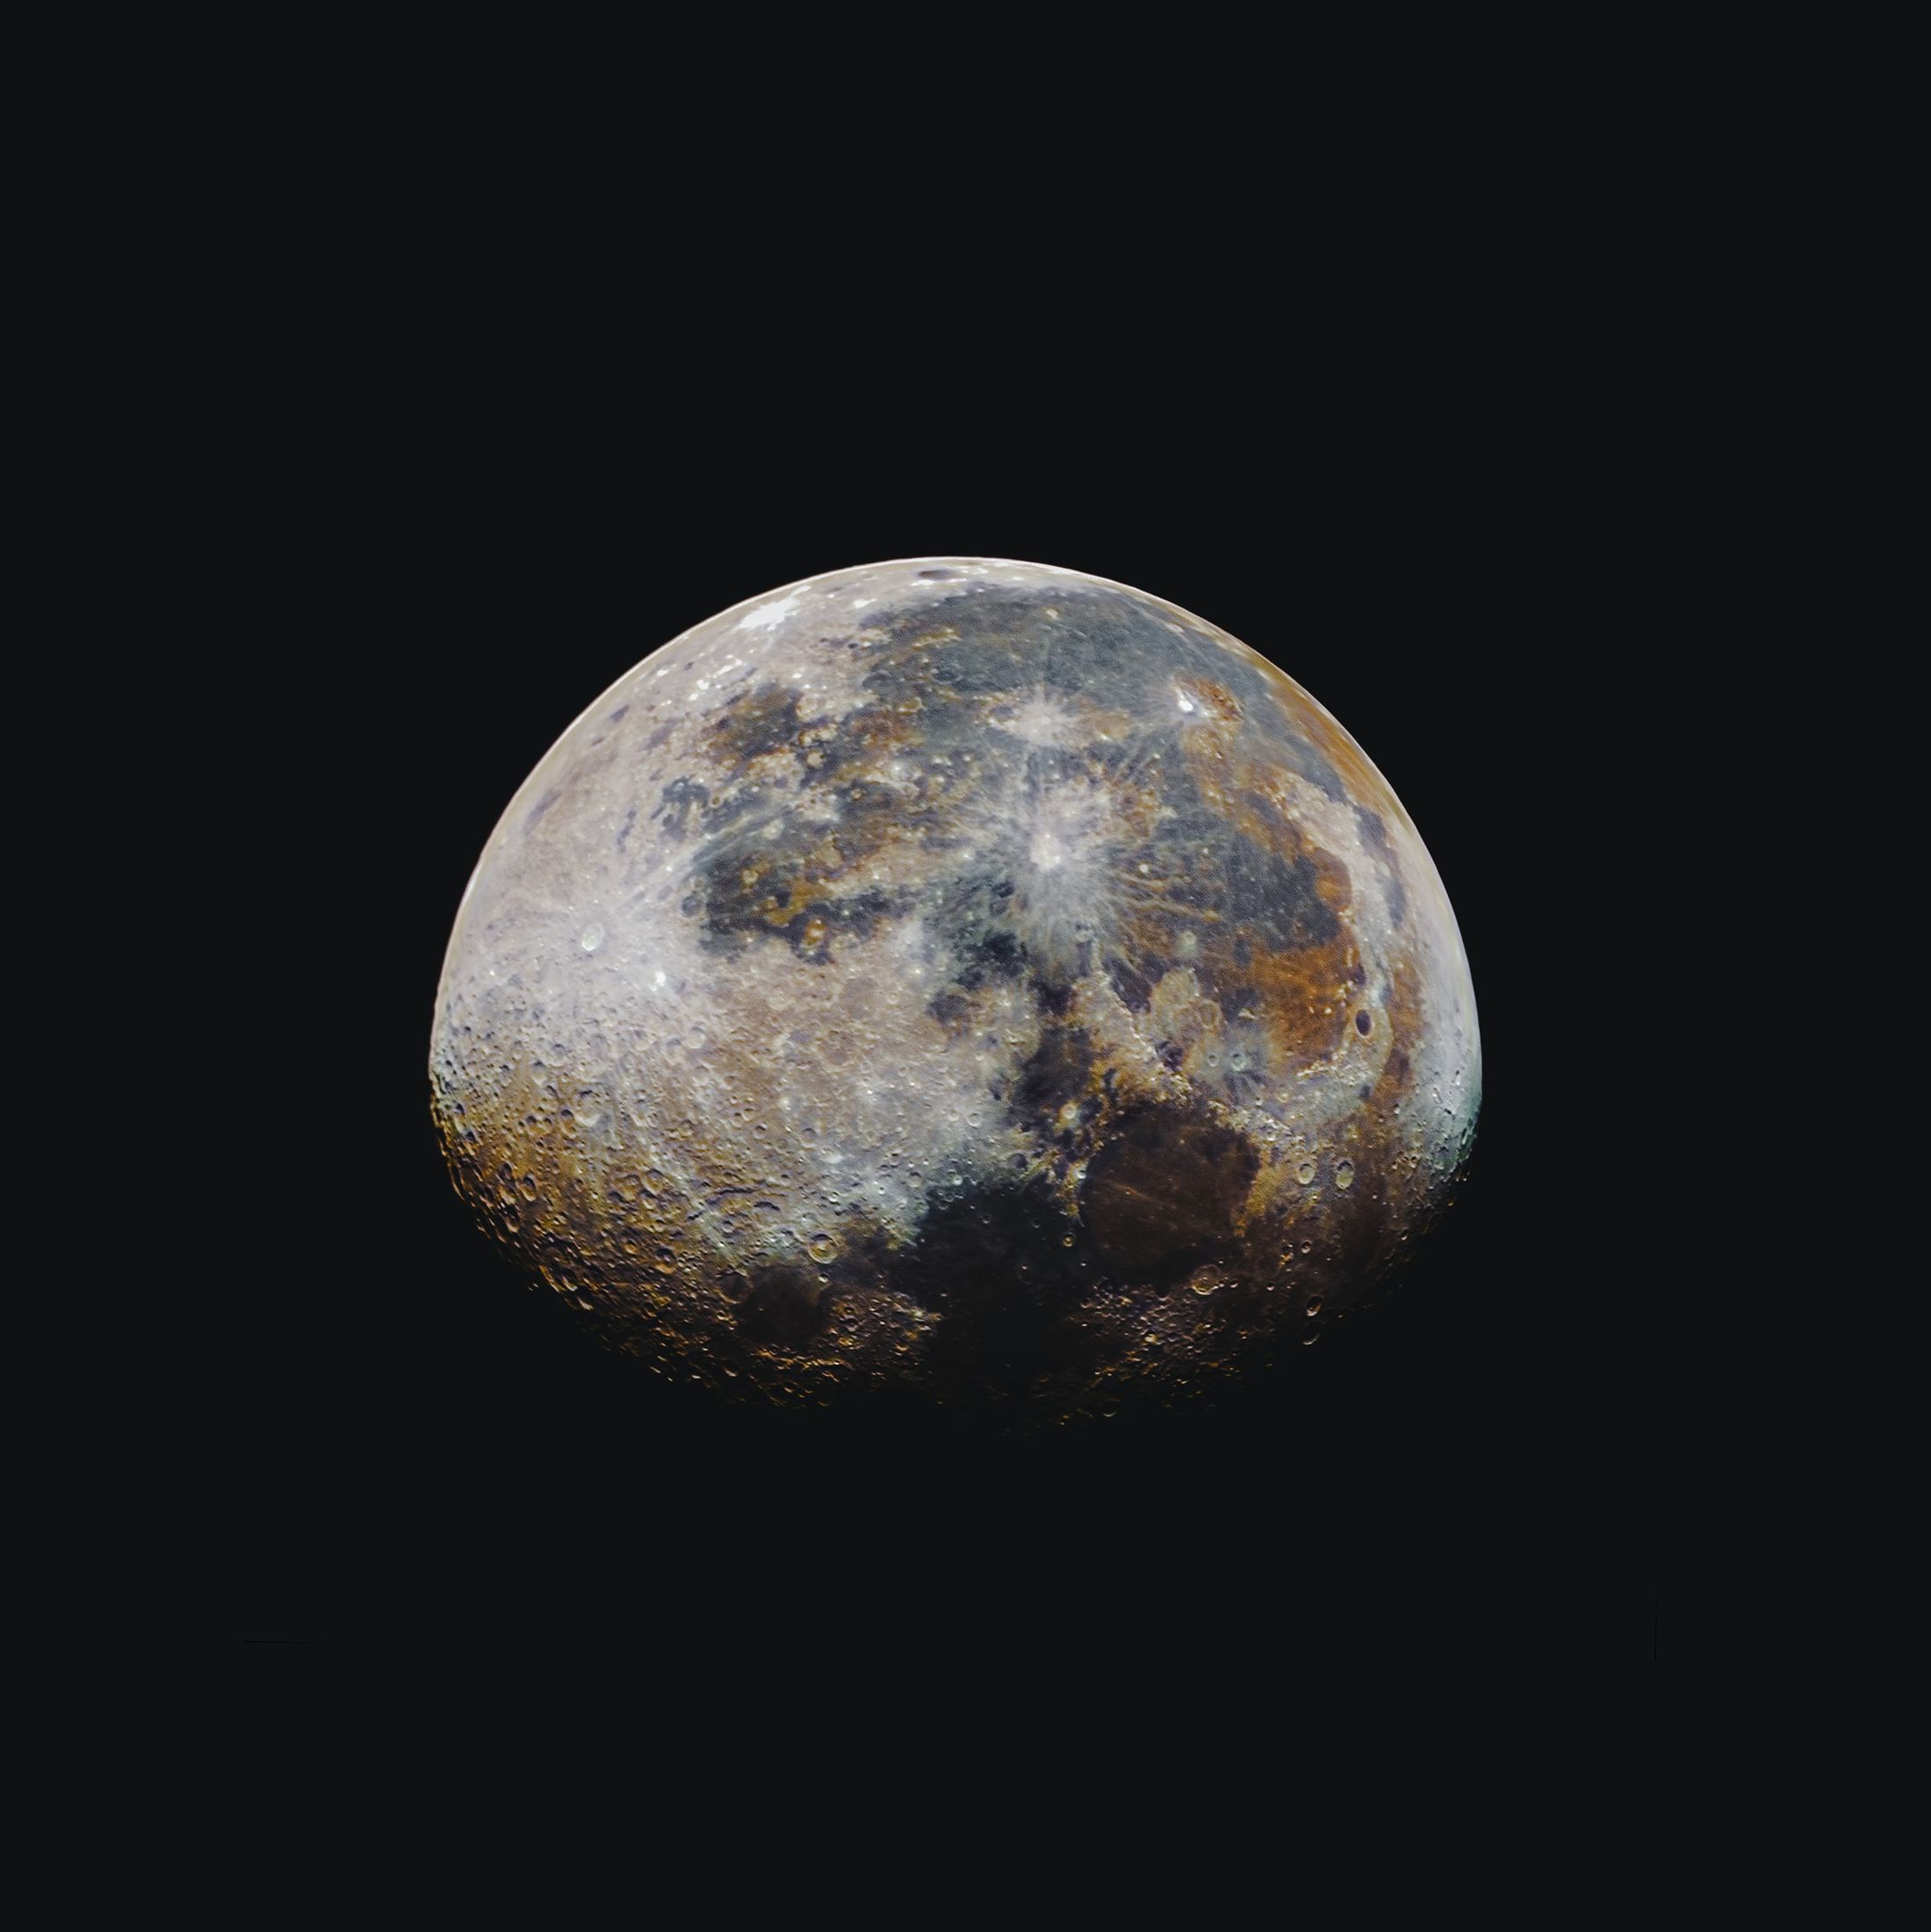 full moon in black background